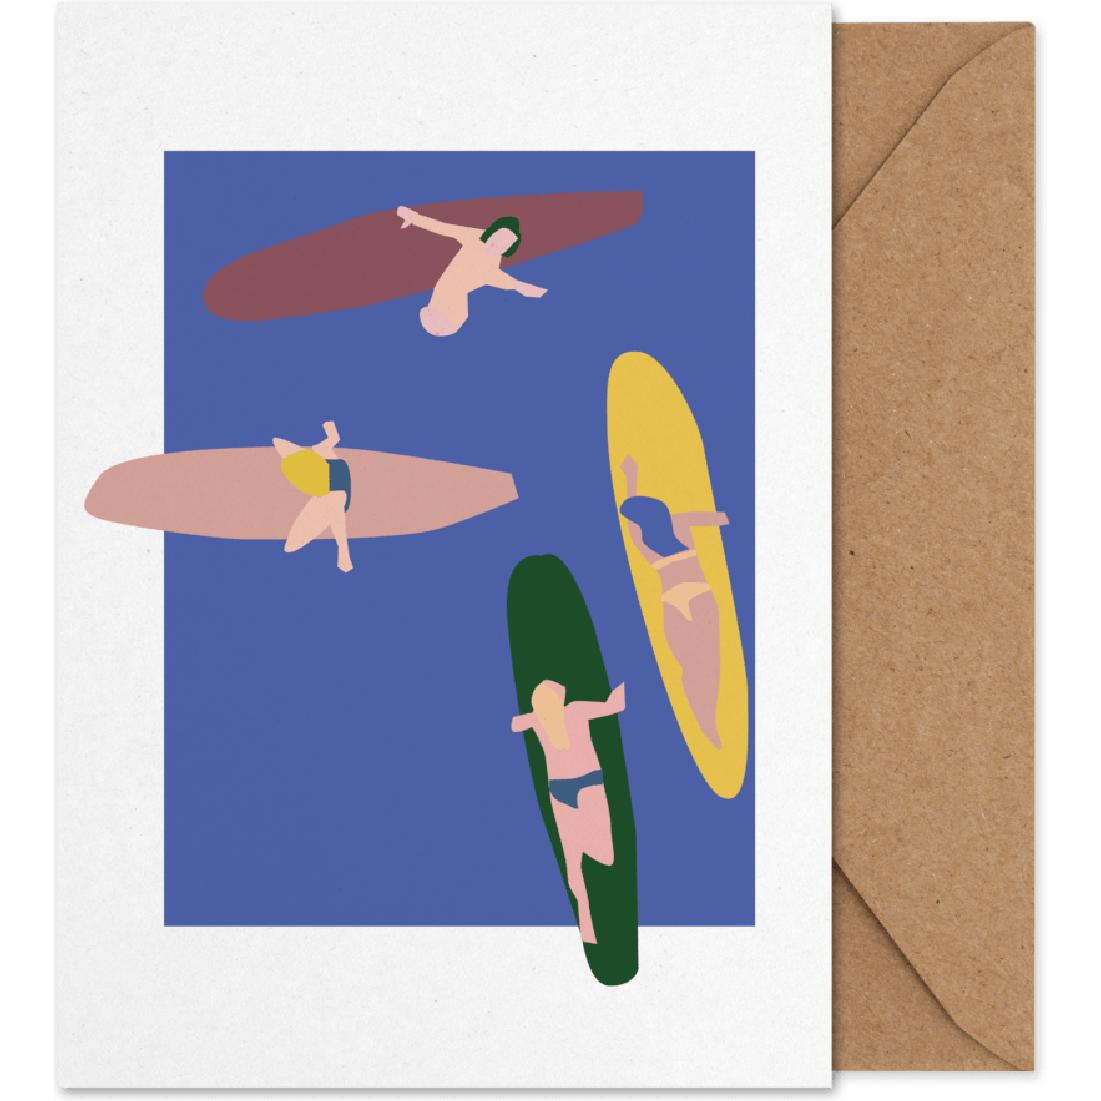 Carta artistica di surfisti collettivi di carta